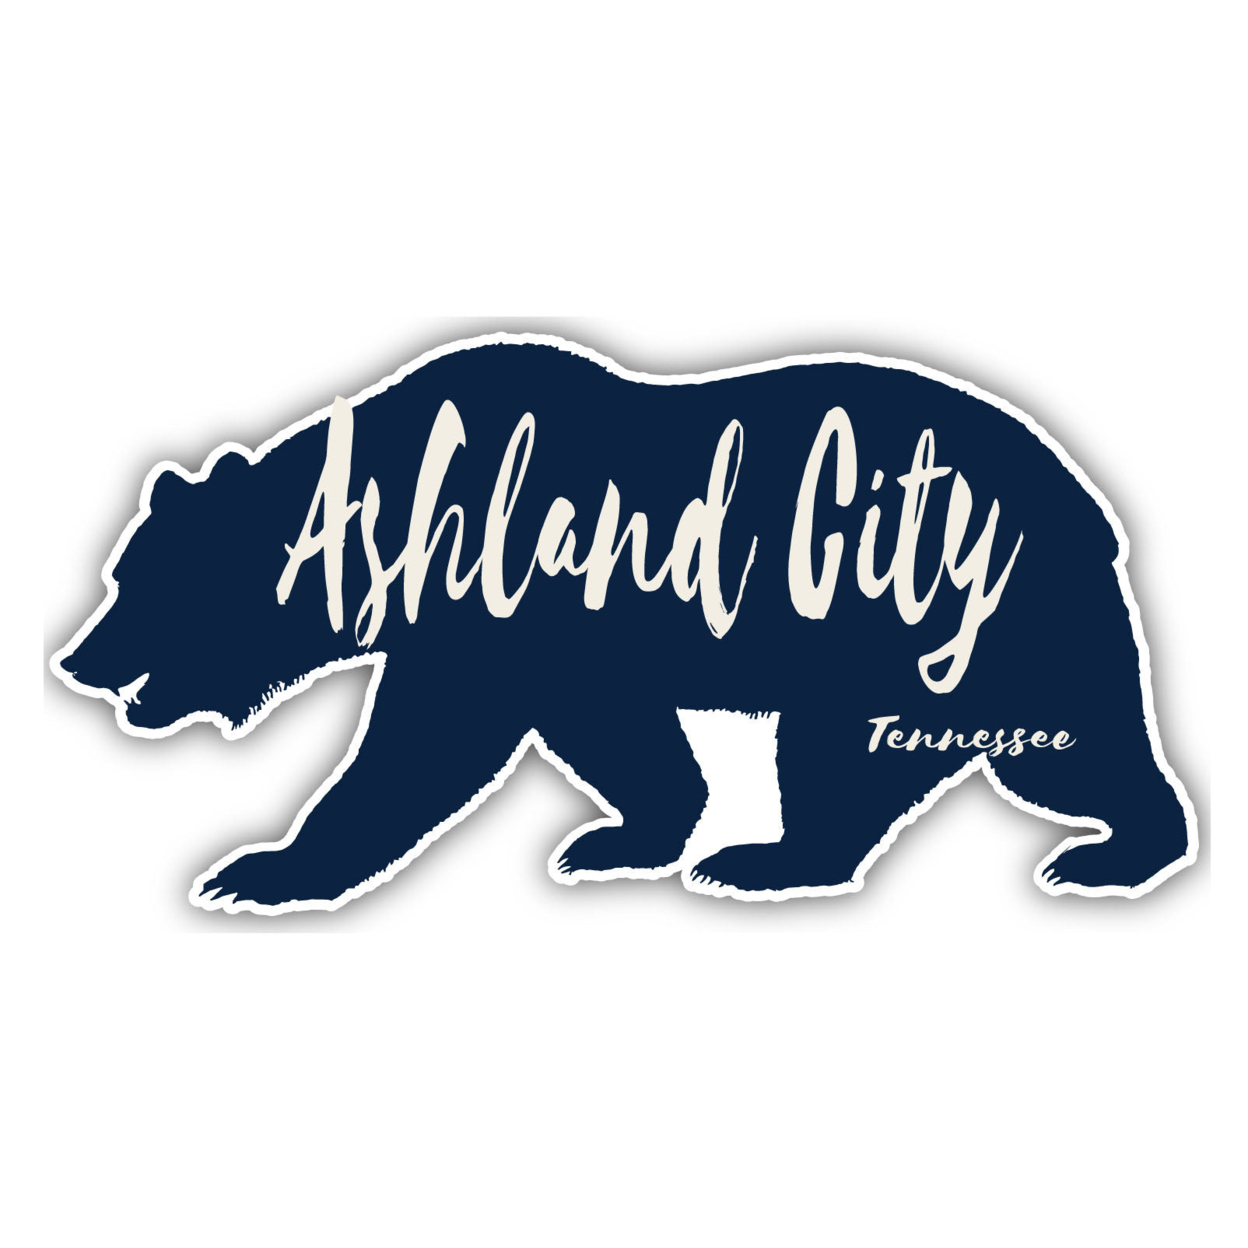 Ashland City Tennessee Souvenir Decorative Stickers (Choose Theme And Size) - Single Unit, 6-Inch, Bear